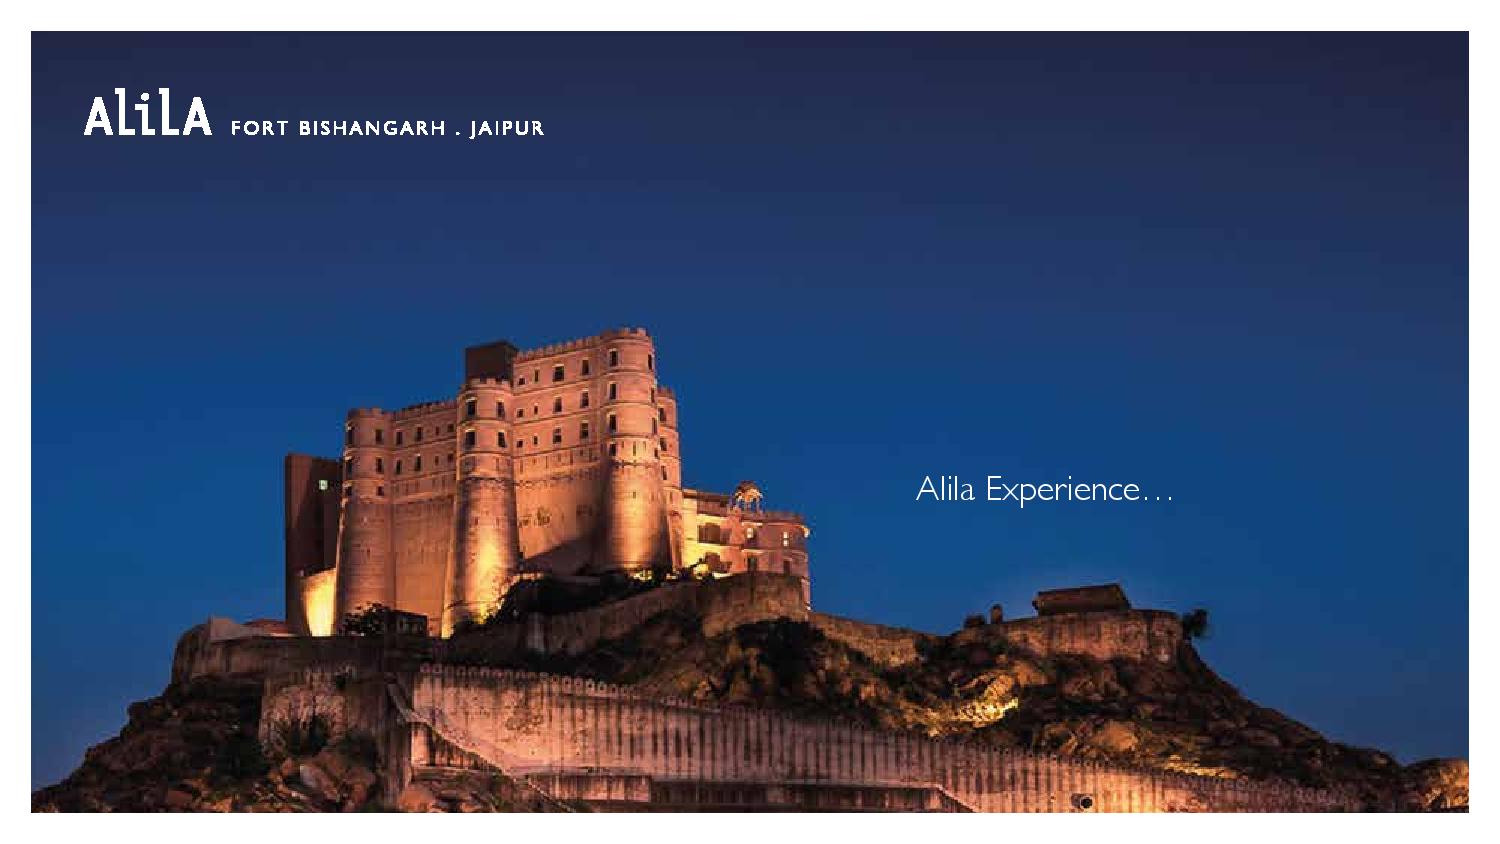 alilafortbishangarh experience page 001 - REVIEW - Alila Fort Bishangarh (Jaipur, India)